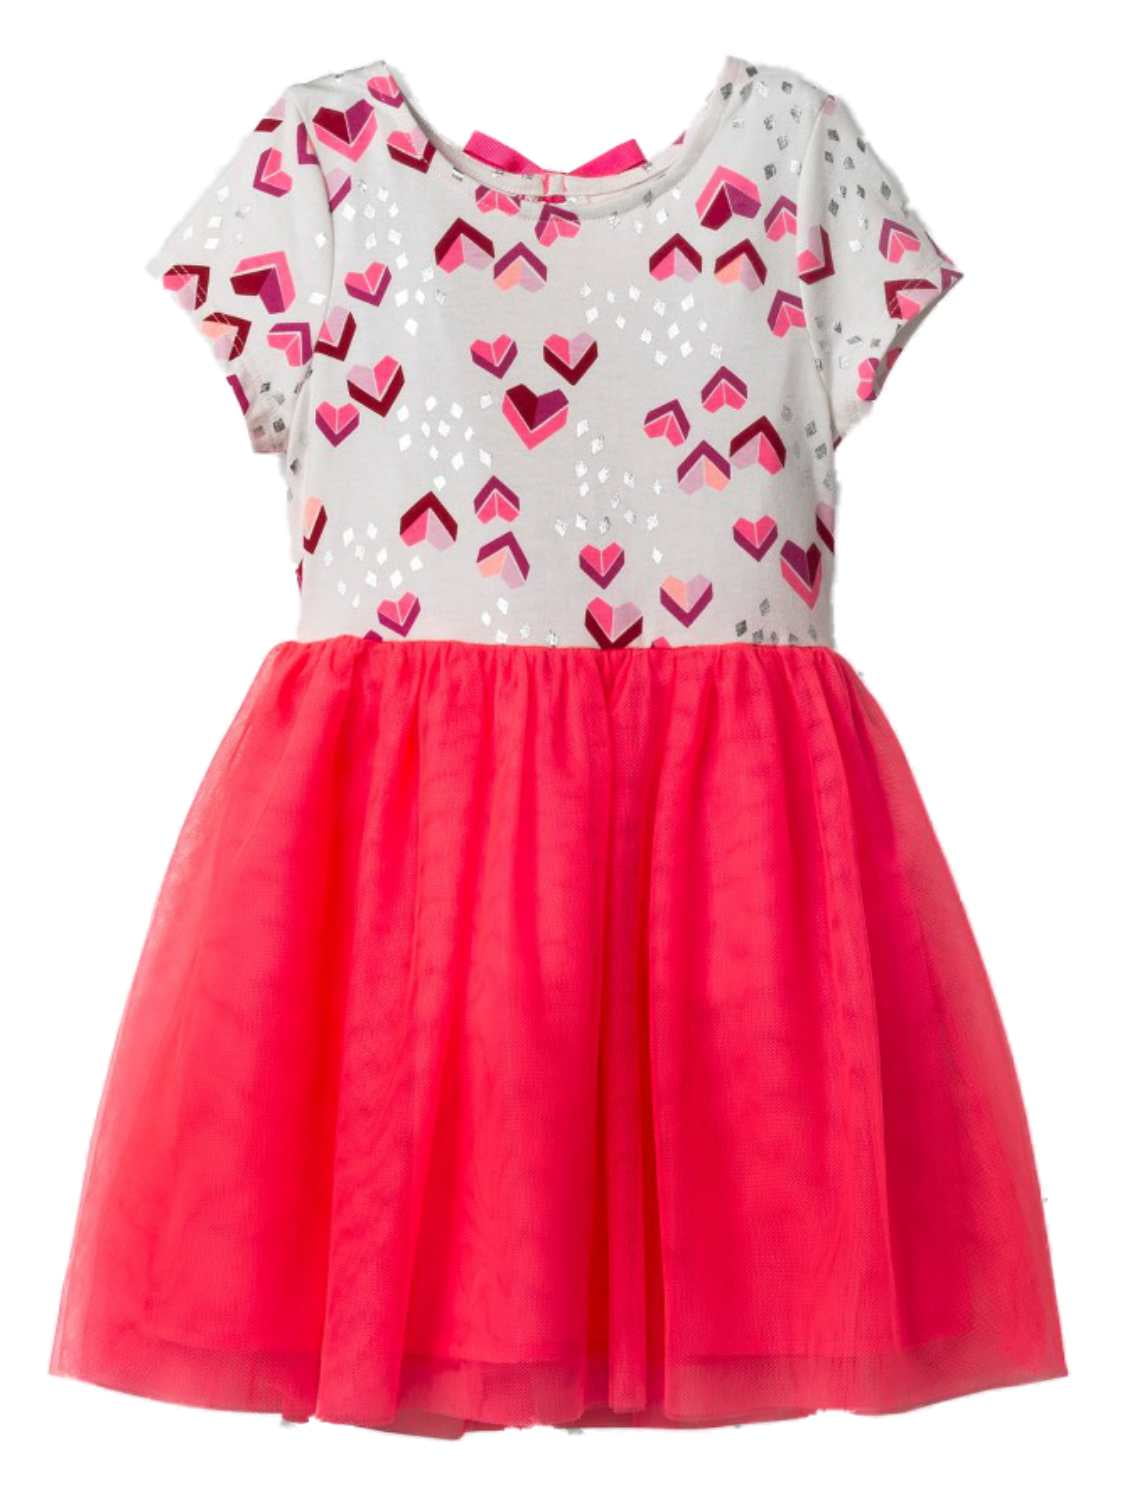 Toddler Girls Pink Heart Dress Valentines Day Tutu Outfit 2T - Walmart.com